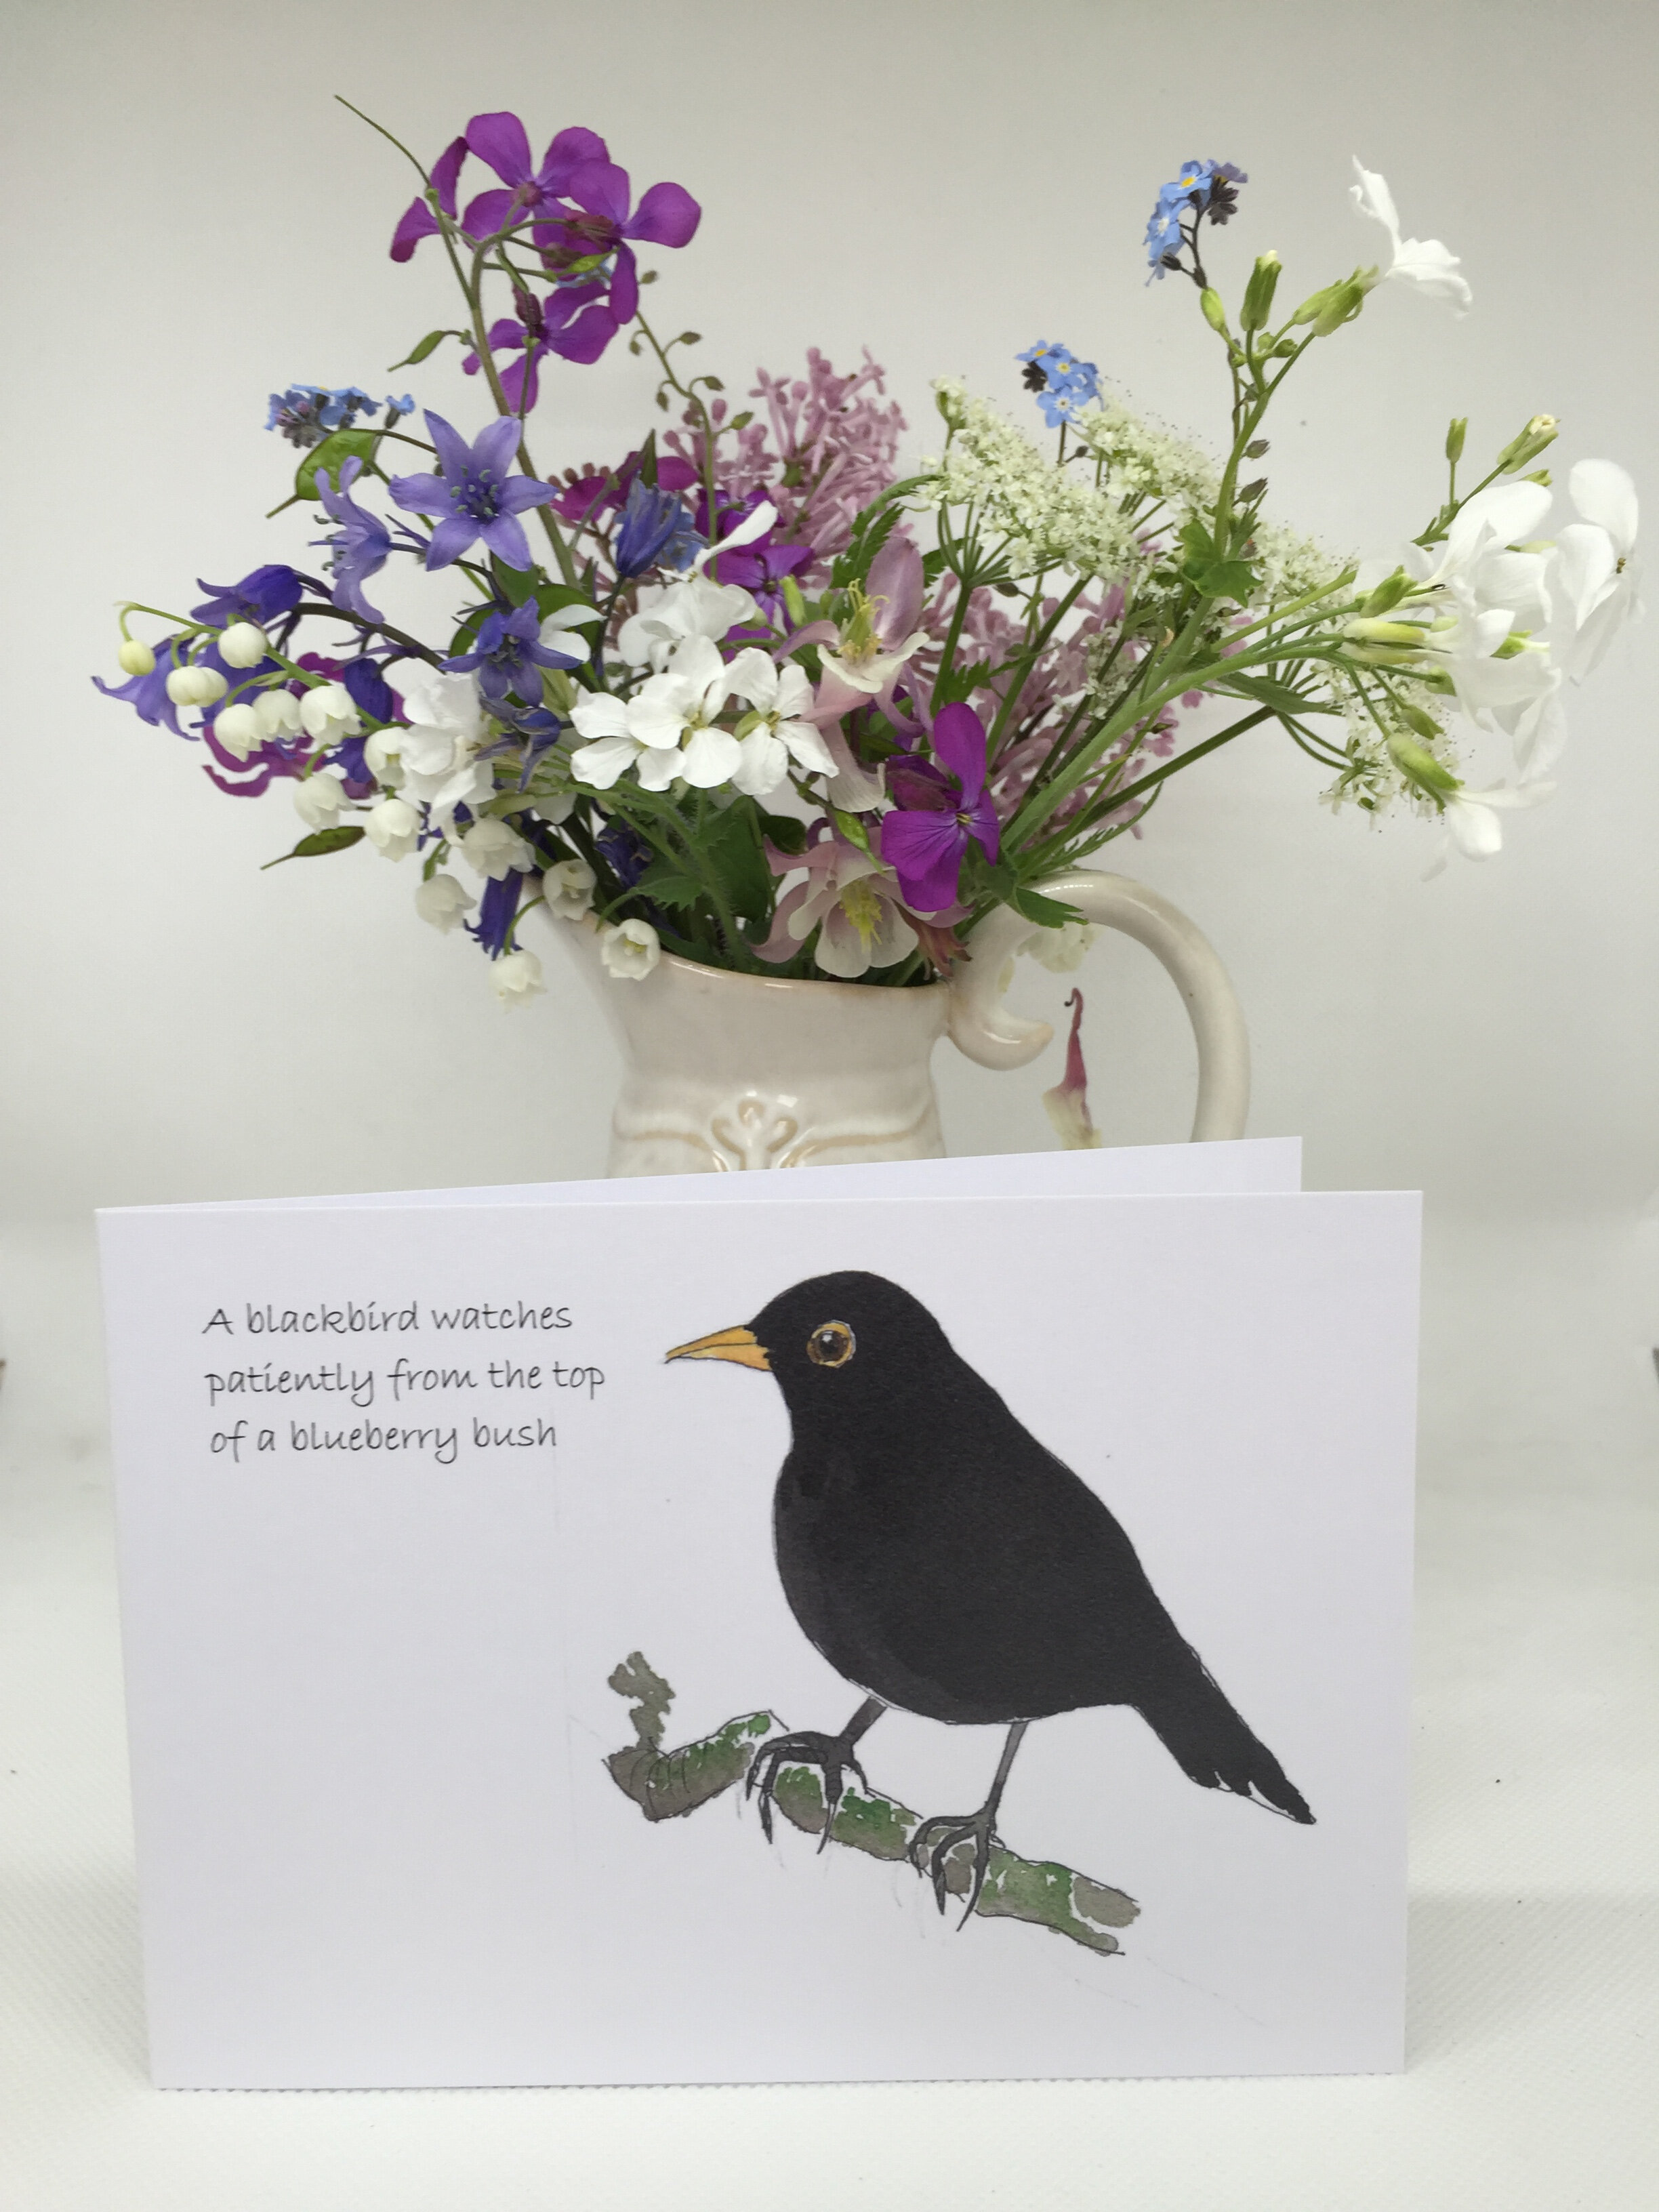 Blackbird with text